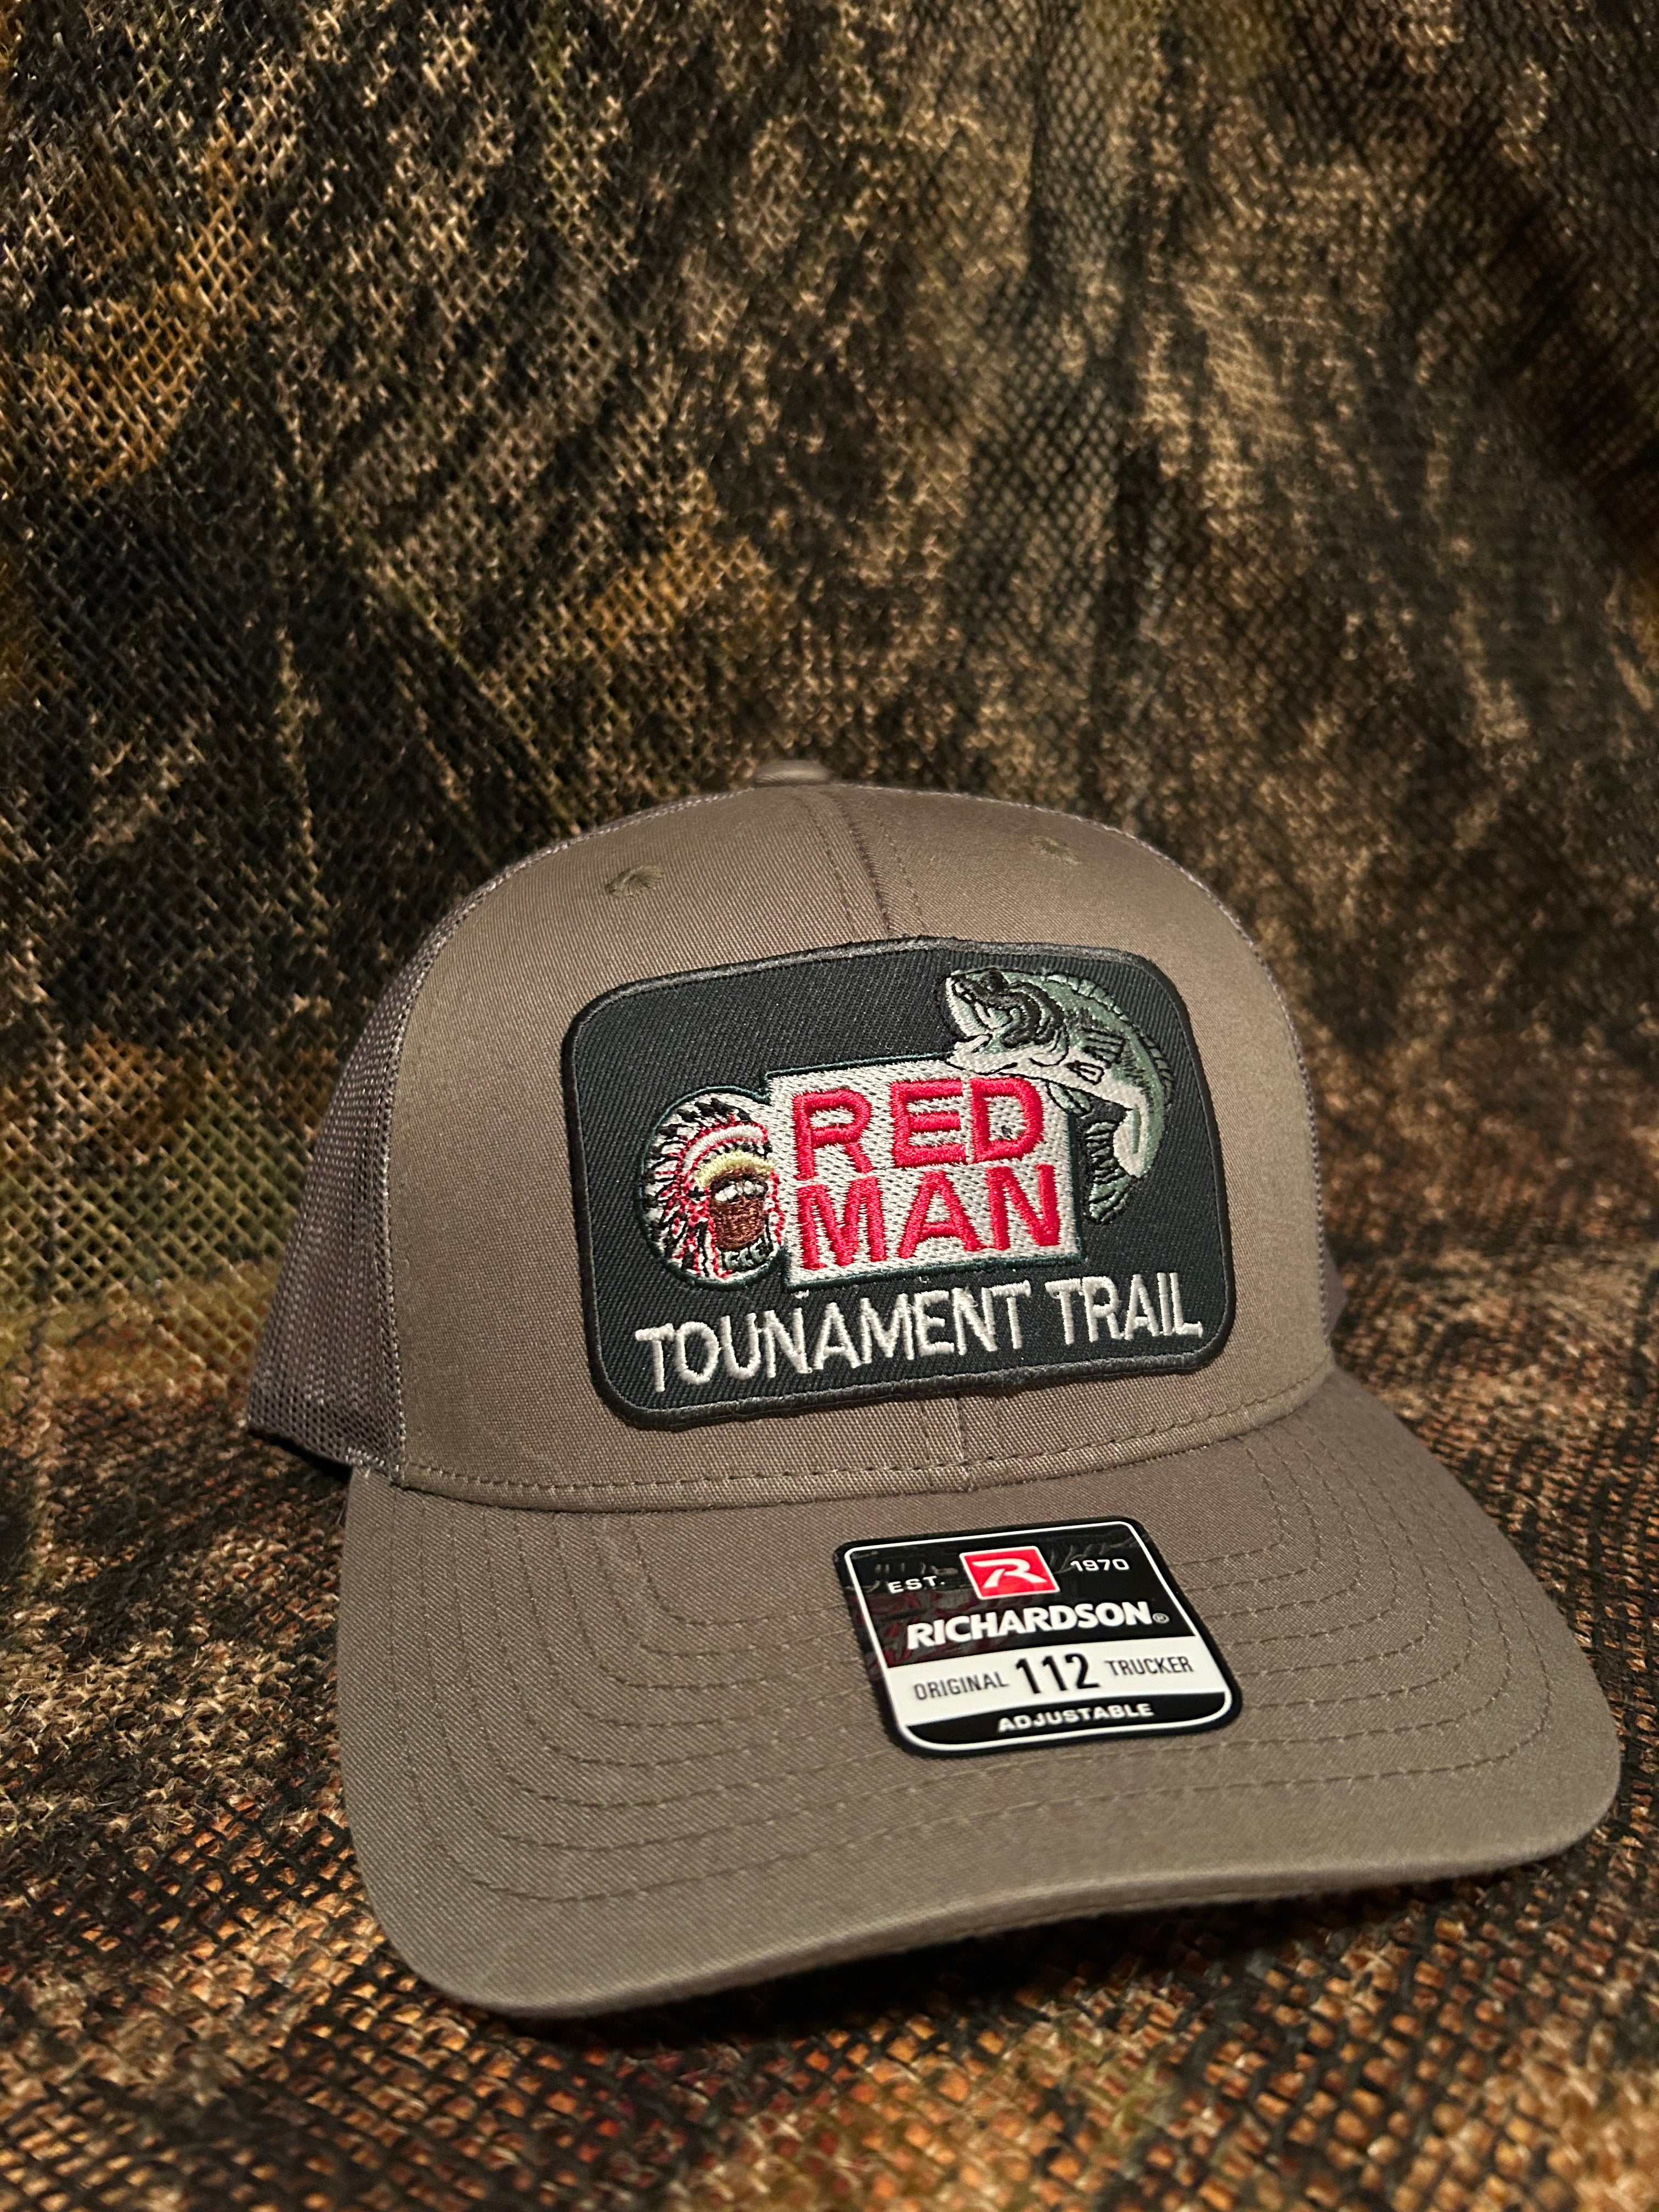 Red Man tournament Trail Olive green Richardson 112 trucker hat - Bass –  BANJO BRAND HAT CO.